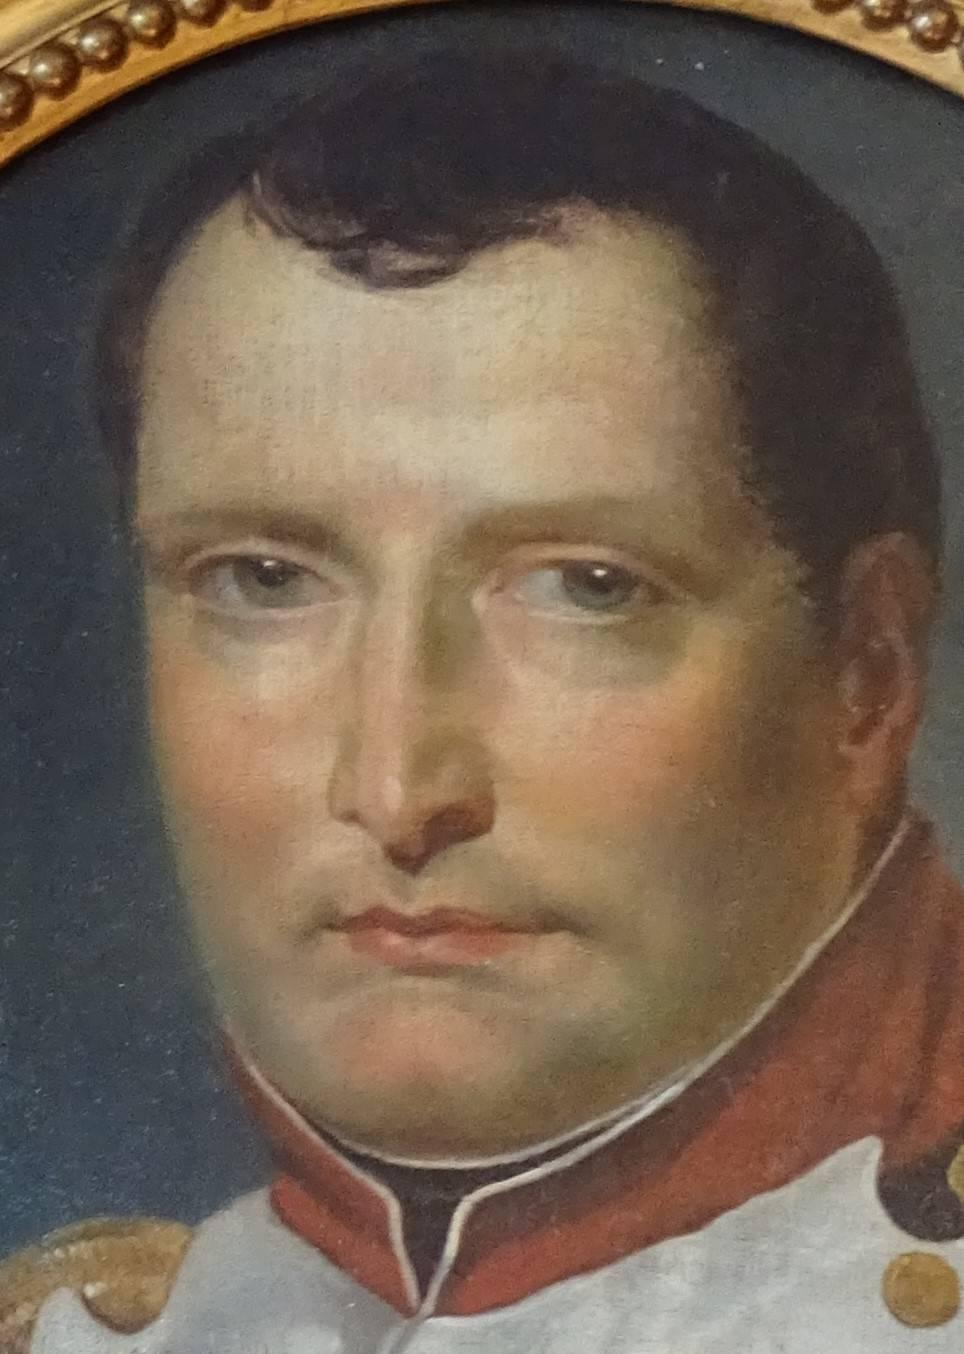 Oil on canvas
napoleon portrait
19th century.